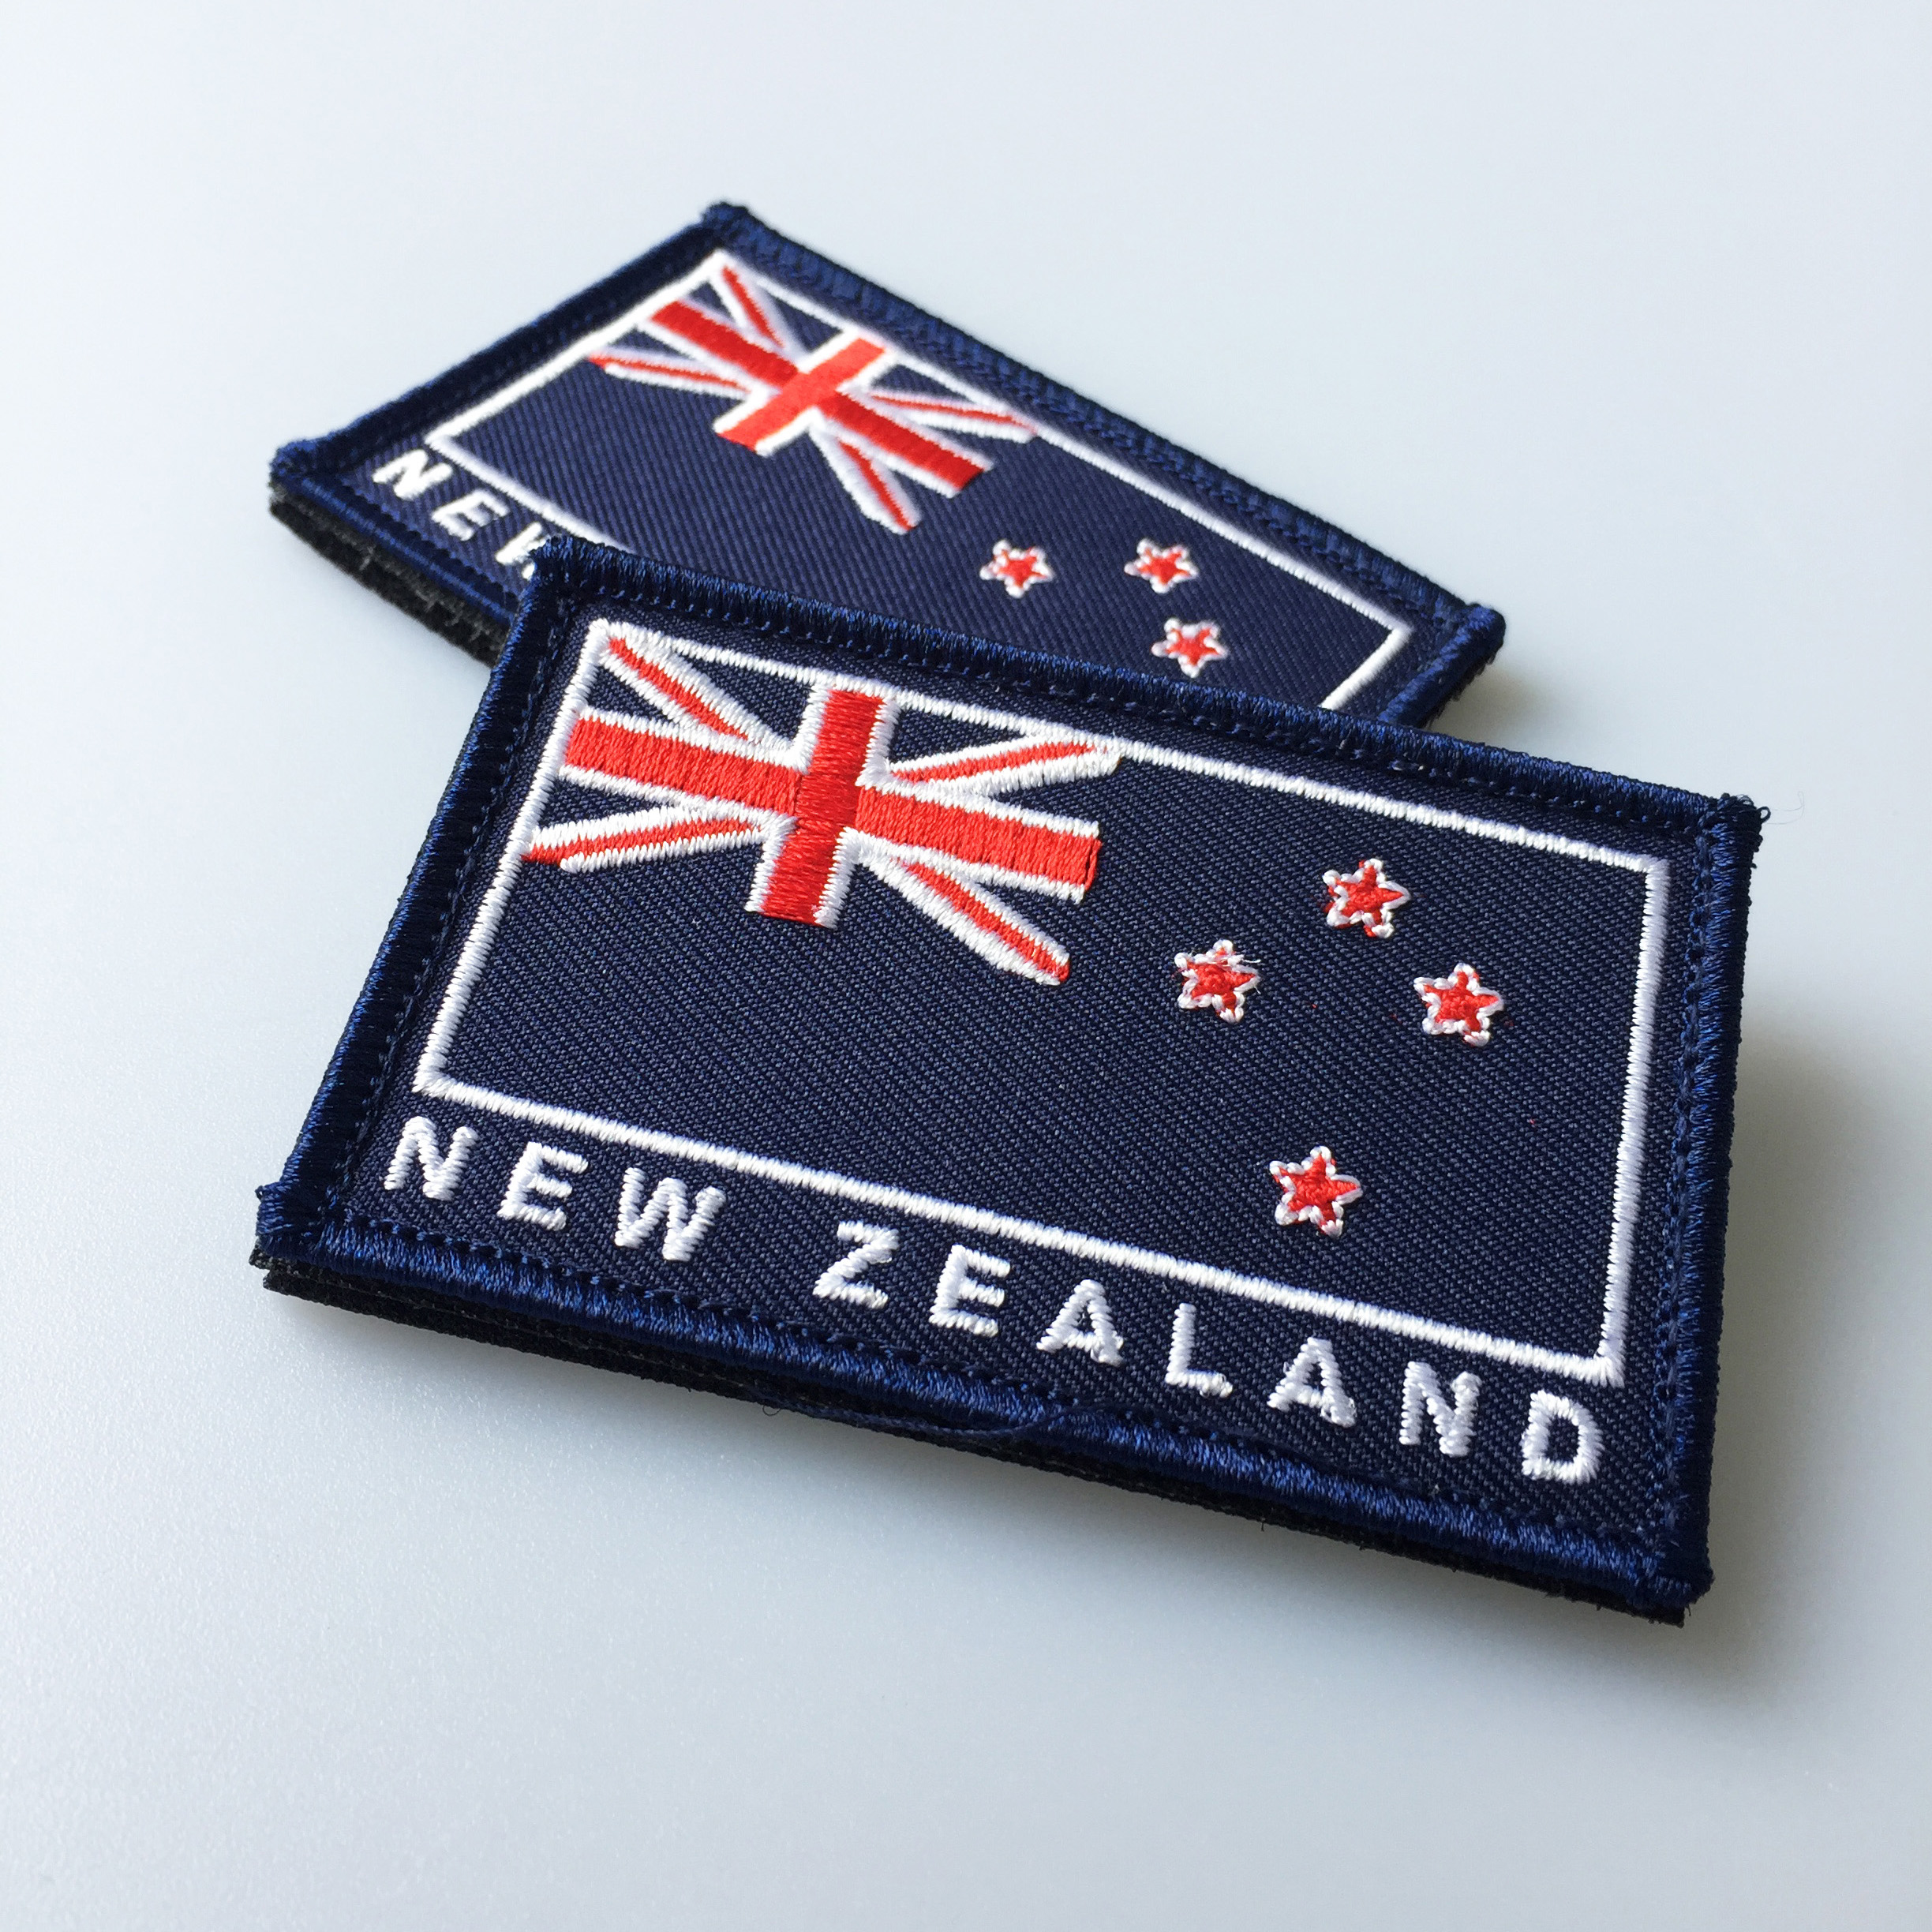 New Zealand flag patch original colour. Highest quality patches.